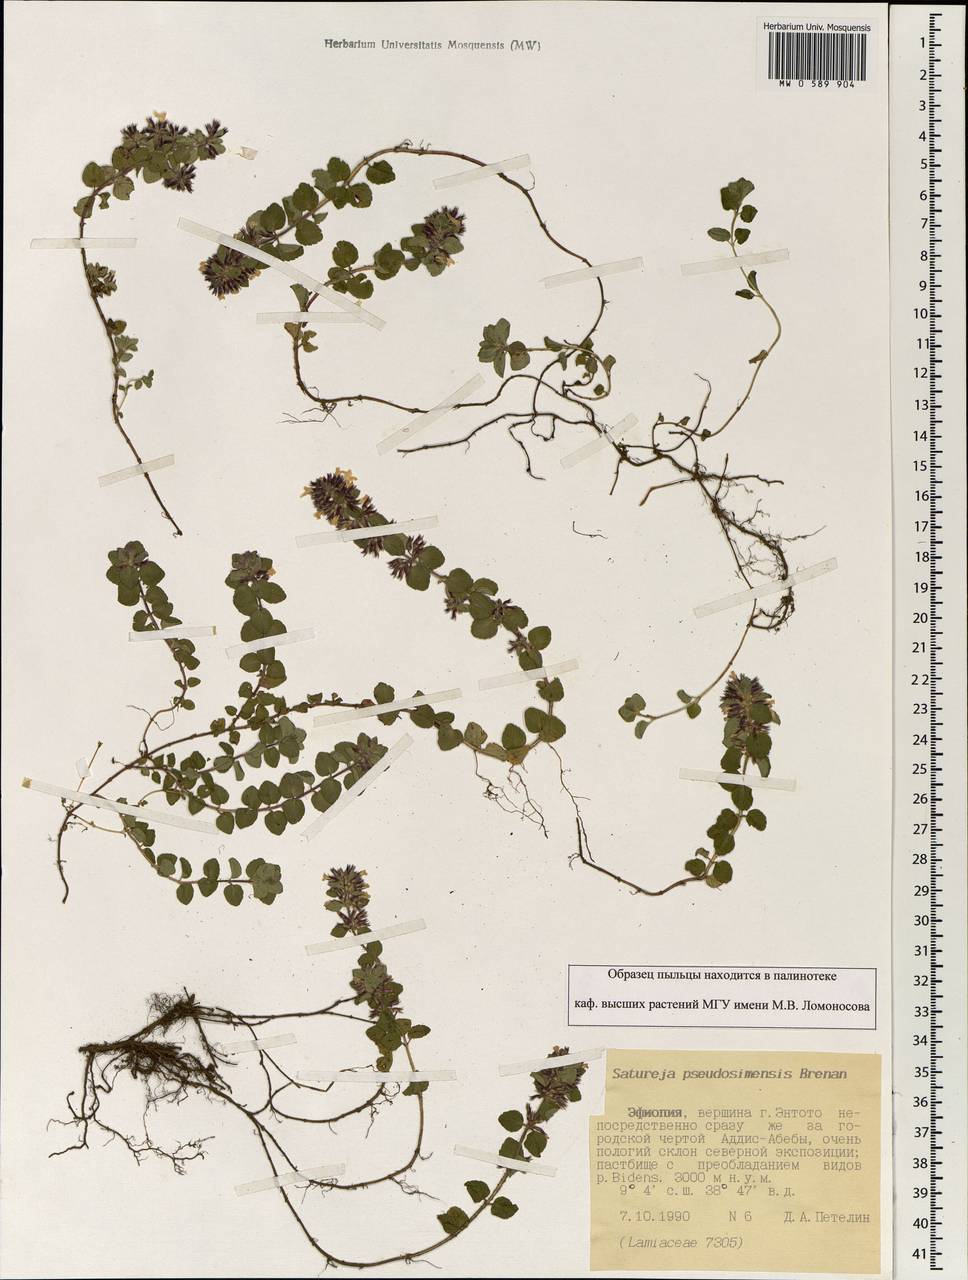 Clinopodium uhligii var. obtusifolium (Avetta) Ryding, Африка (AFR) (Эфиопия)